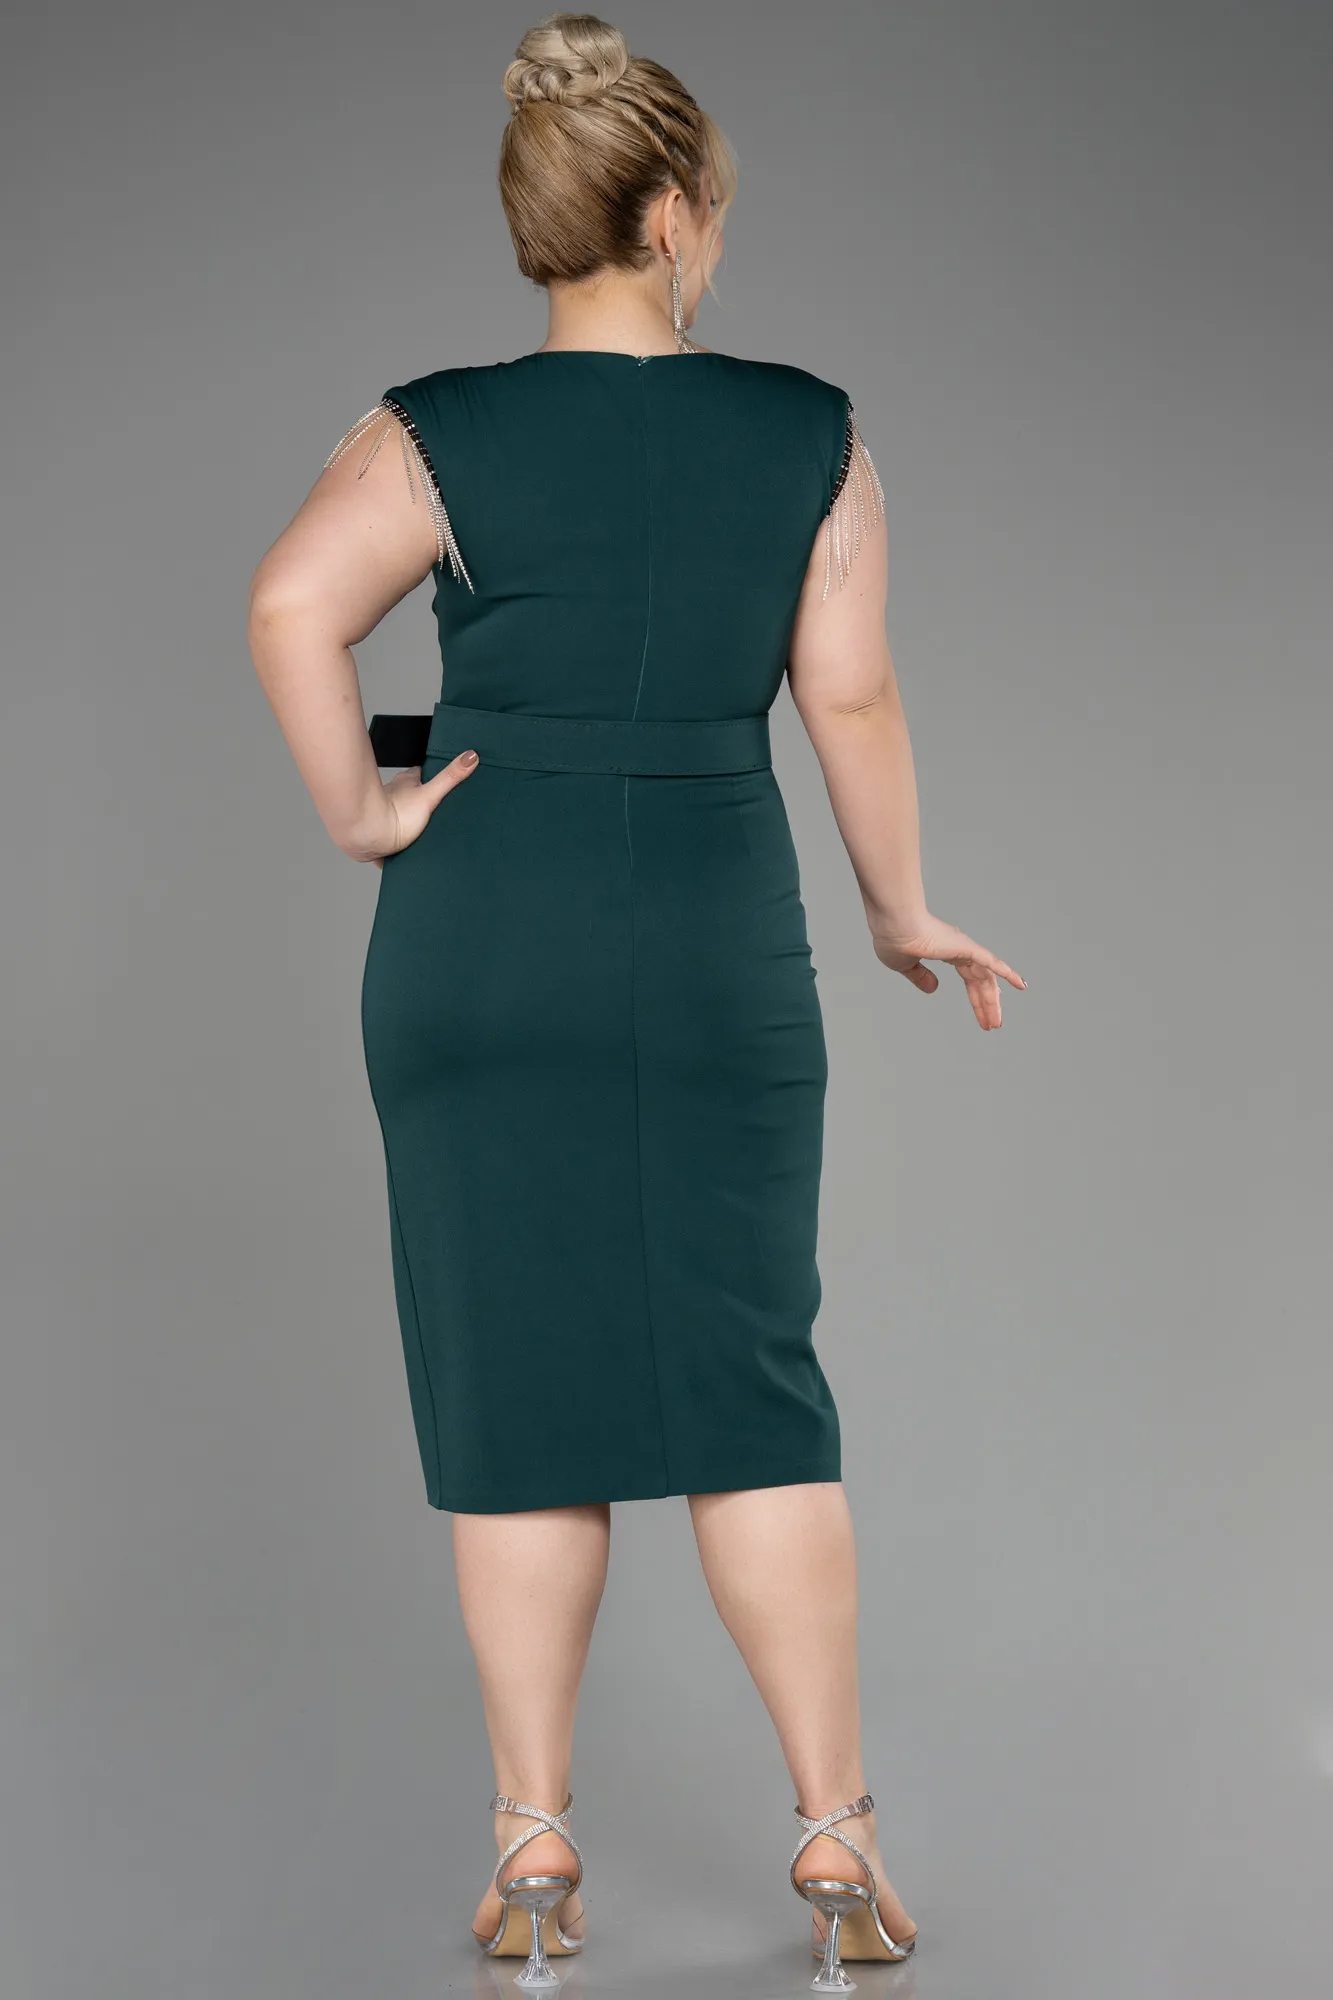 Emerald Green-Midi Plus Size Cocktail Dress ABK2023